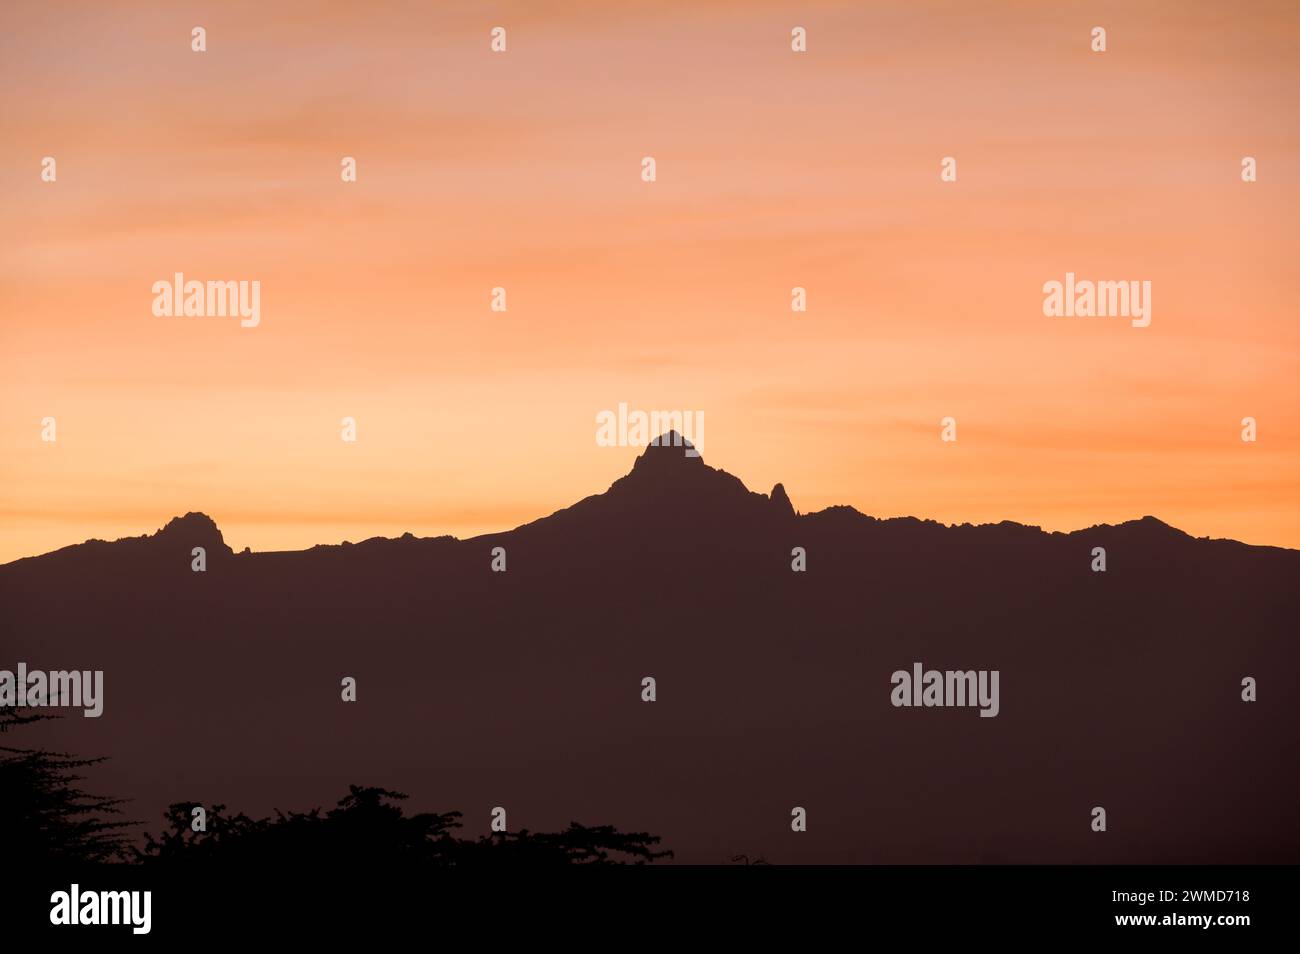 Mount Kenya at sunrise in silhouette against a warm orange sky, Kenya Stock Photo